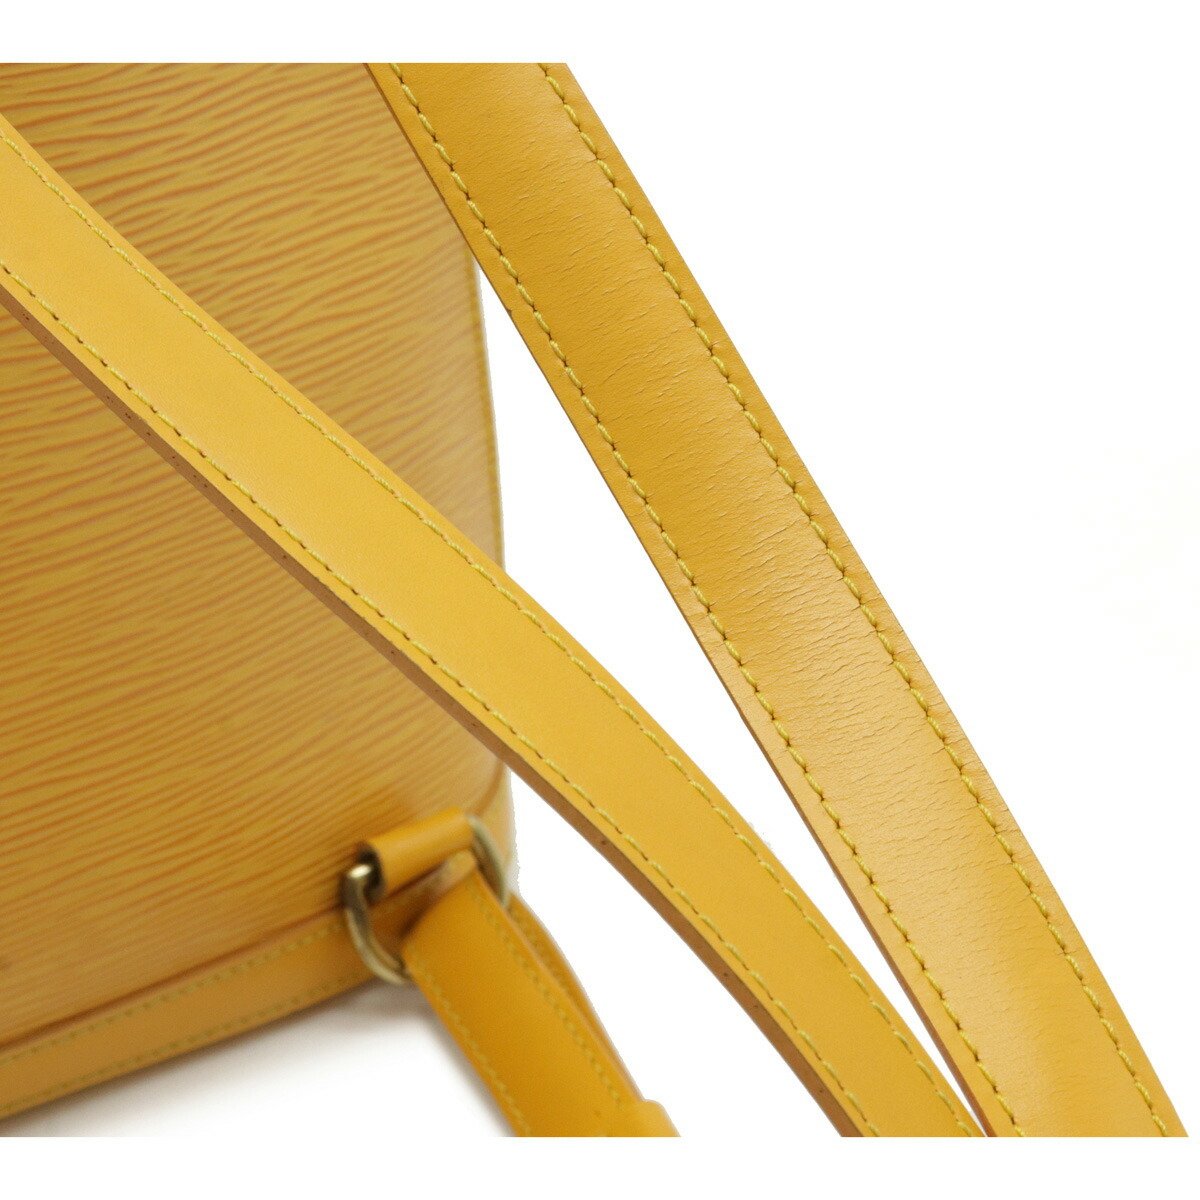 Louis Vuitton Gobelin&#39;s rugzak rugzak kwastje geel epi leer